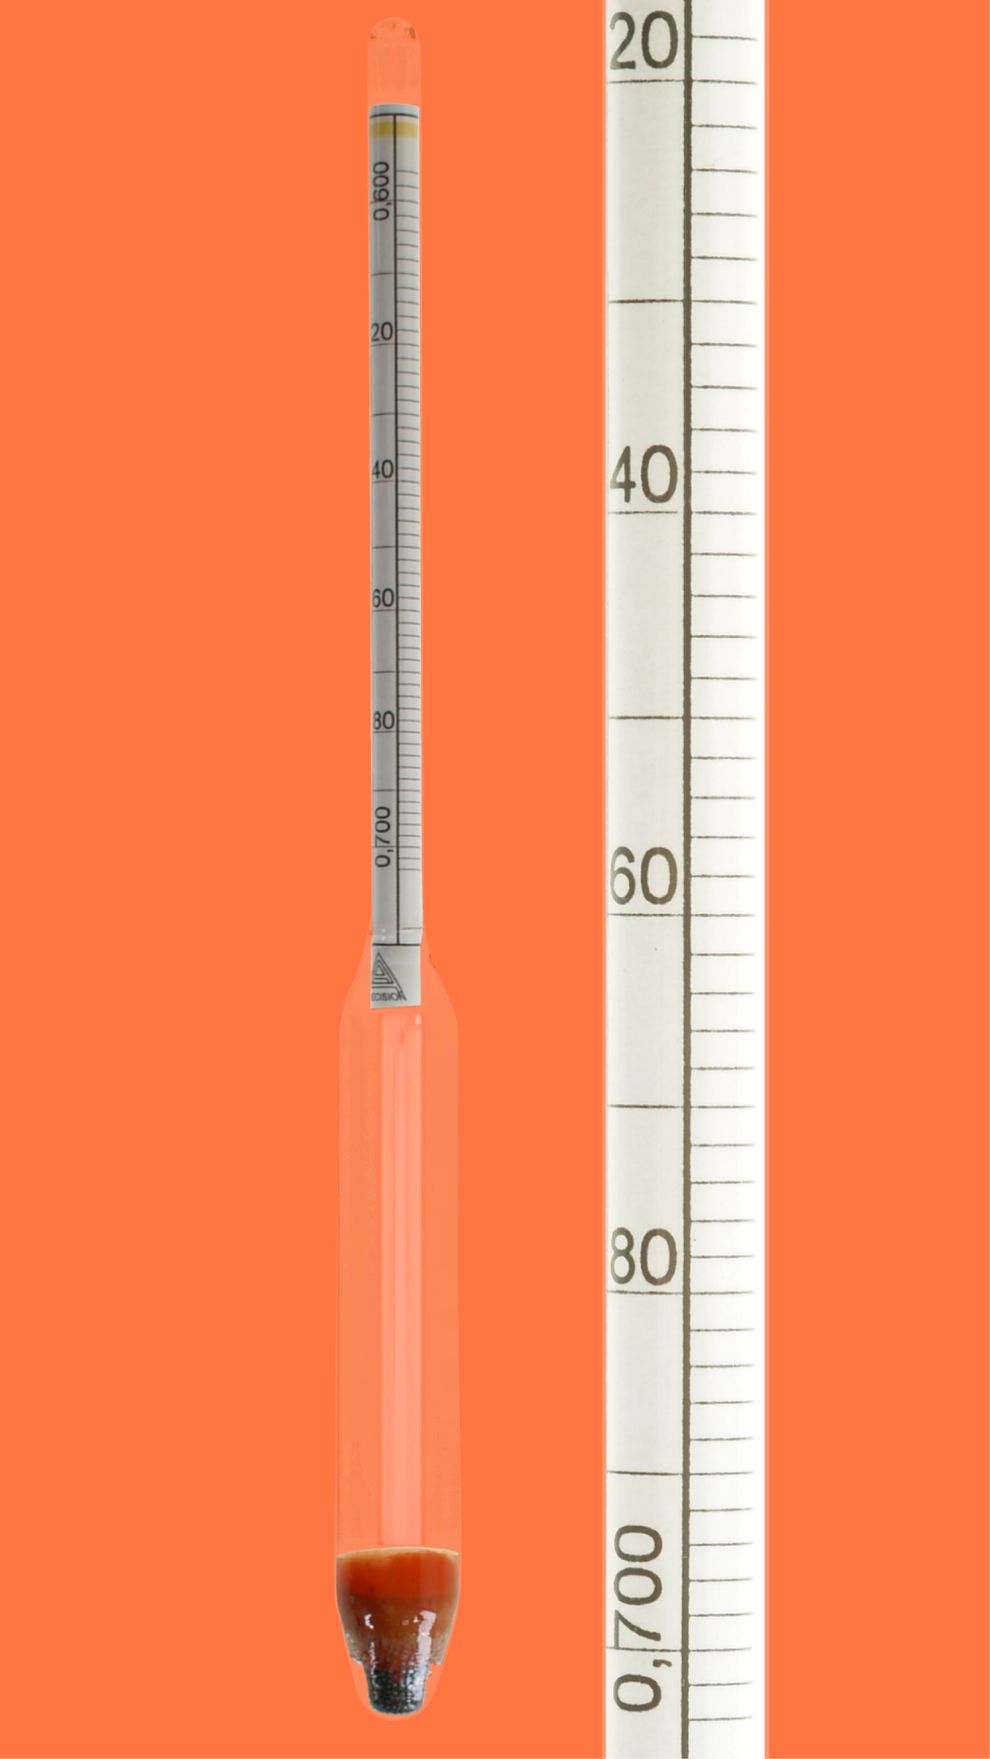 Aräometer, DIN 12791, M100, 1,30-1,40:0,0020g/cm³, Bezugstemp. 20°C, ohne Thermometer